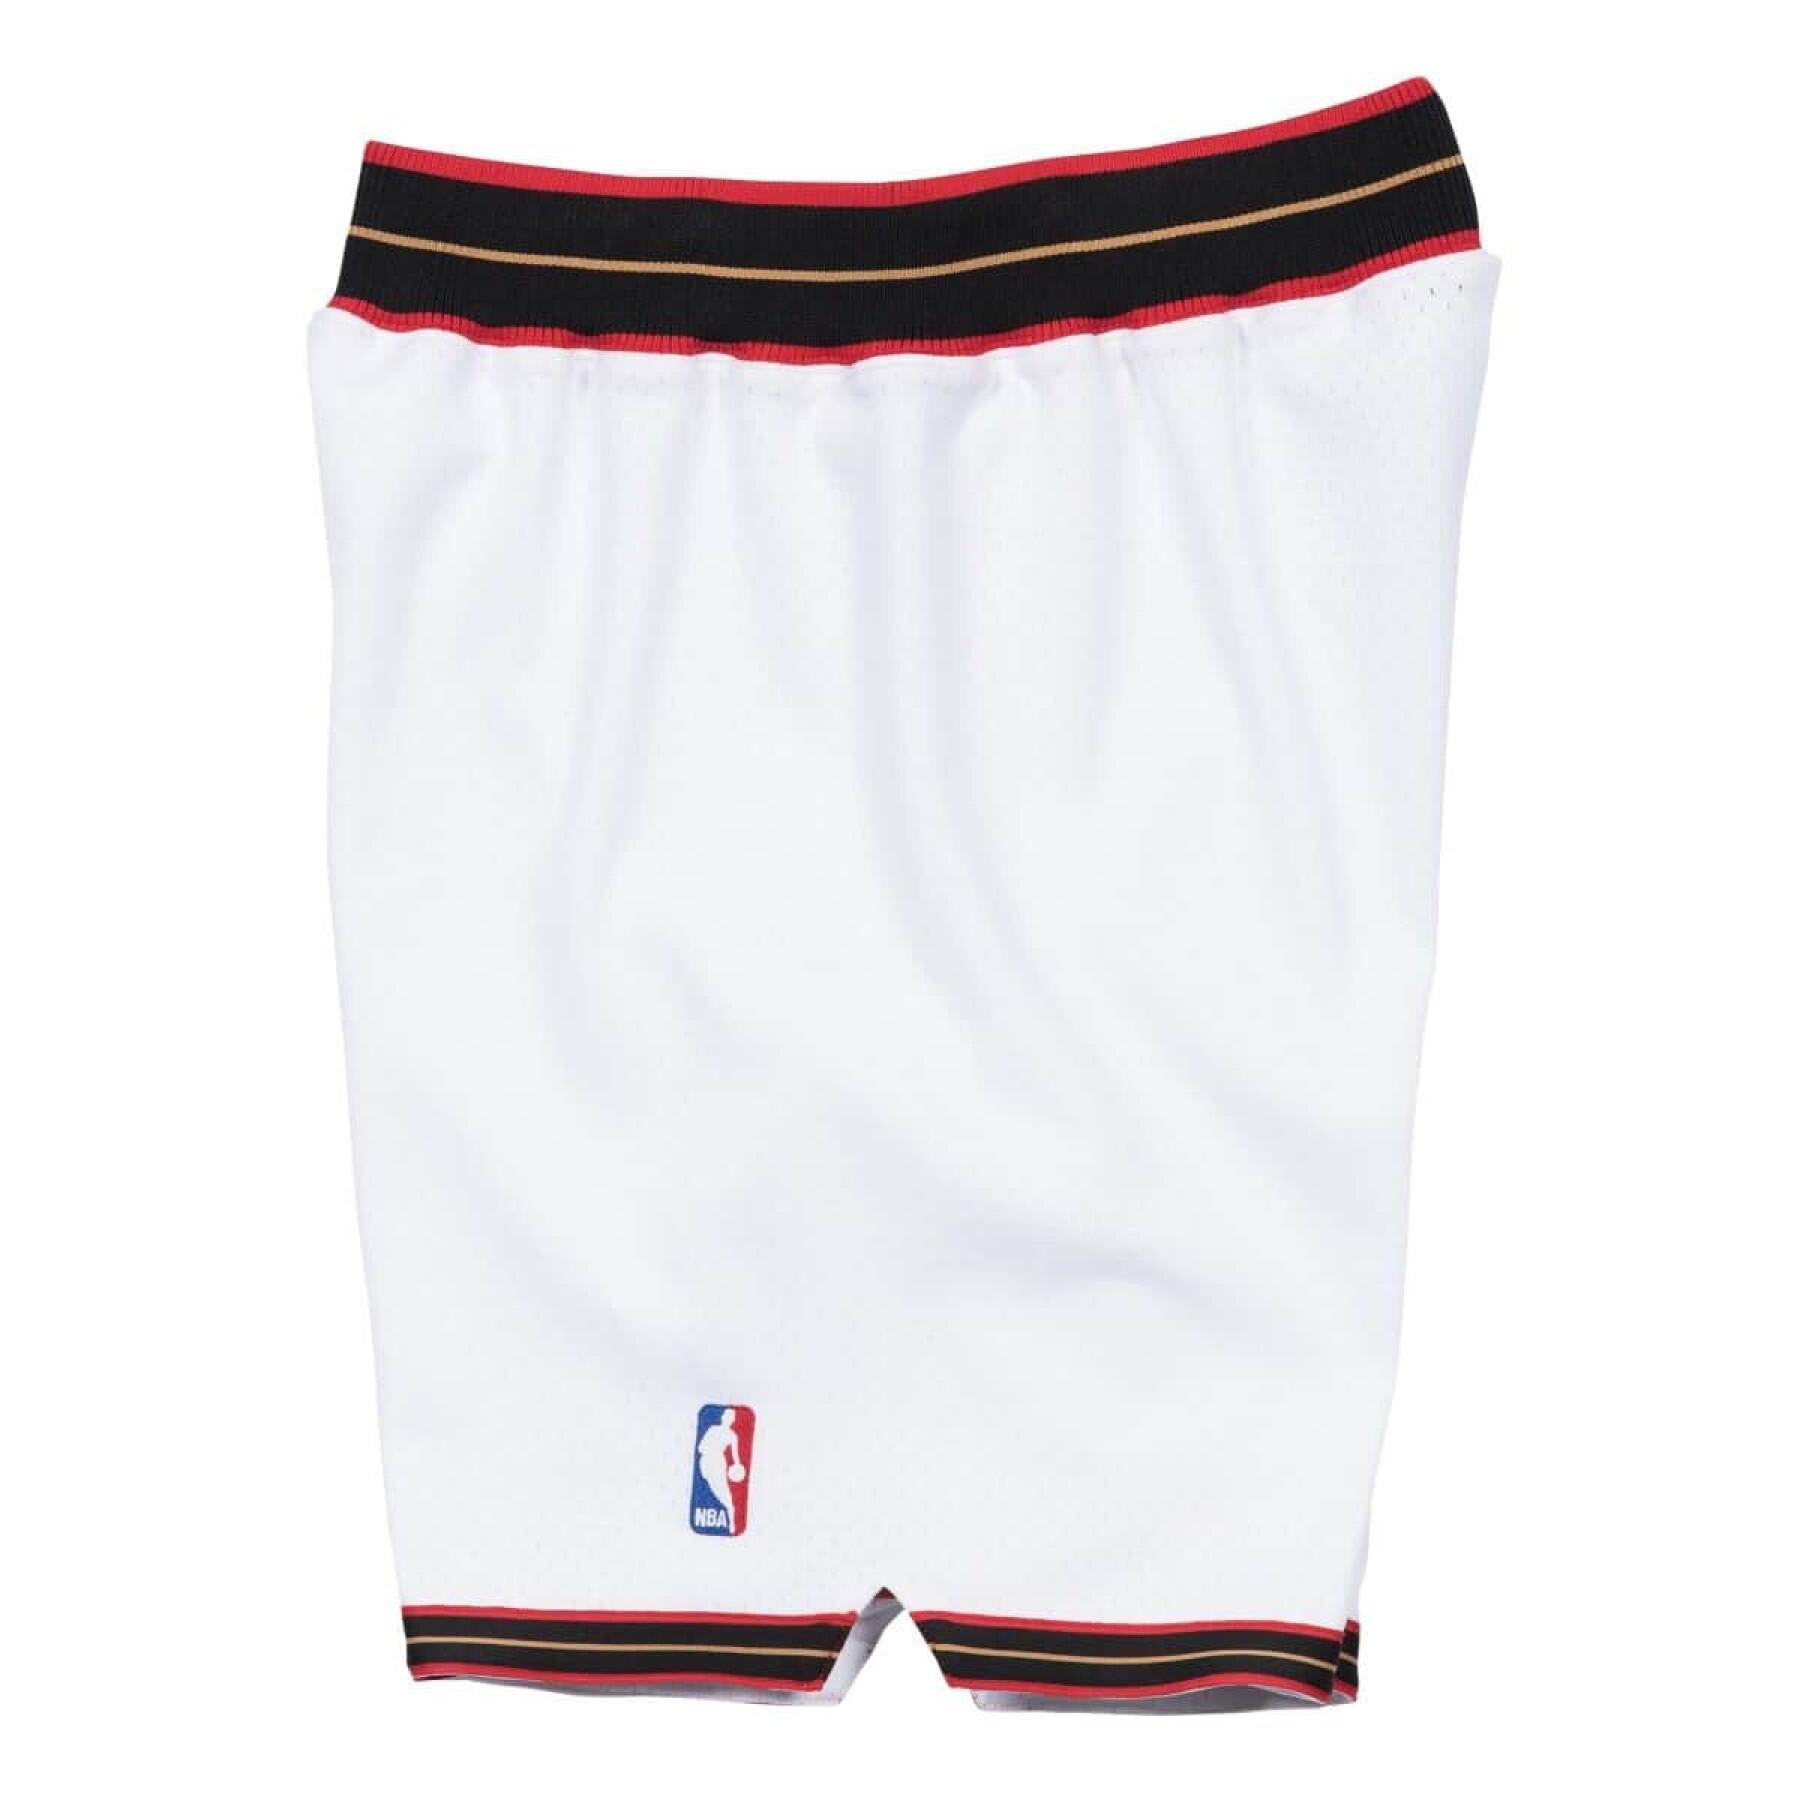 Authentic shorts Philadelphia 76ers nba